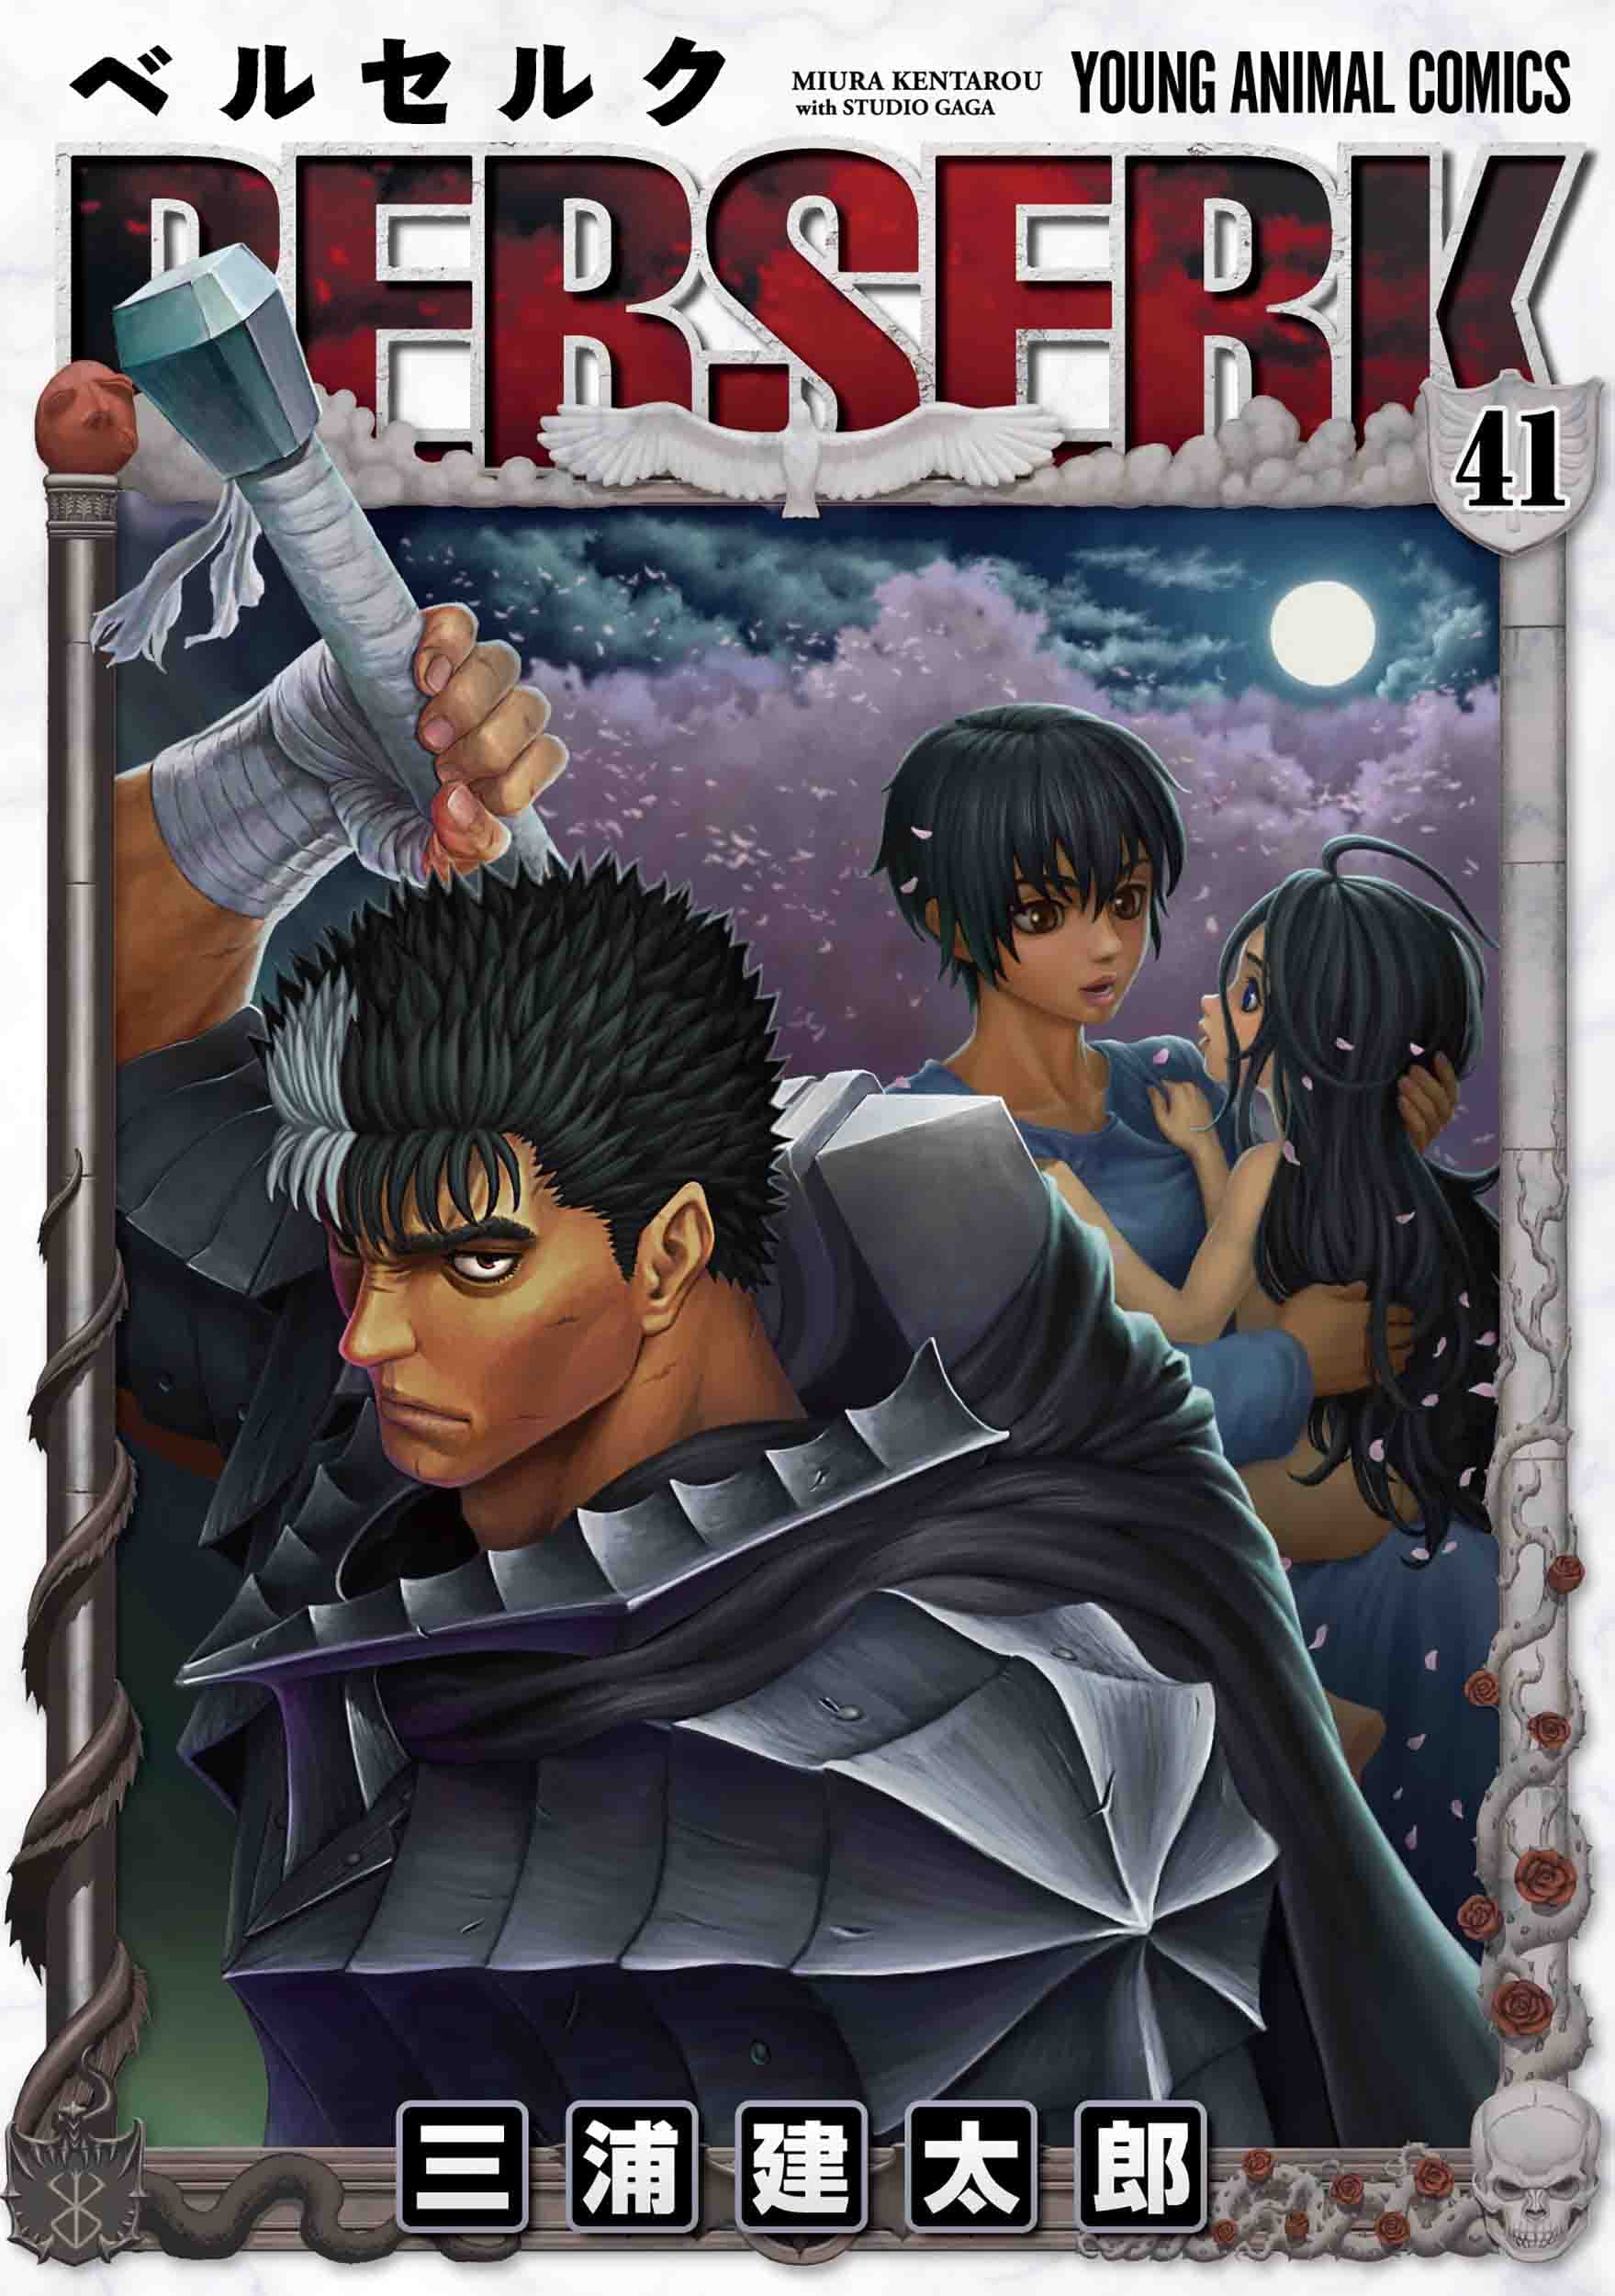 Berserk Vol. 41 SPECIAL EDITION Japanese Manga + Canvas Art & Drama CD